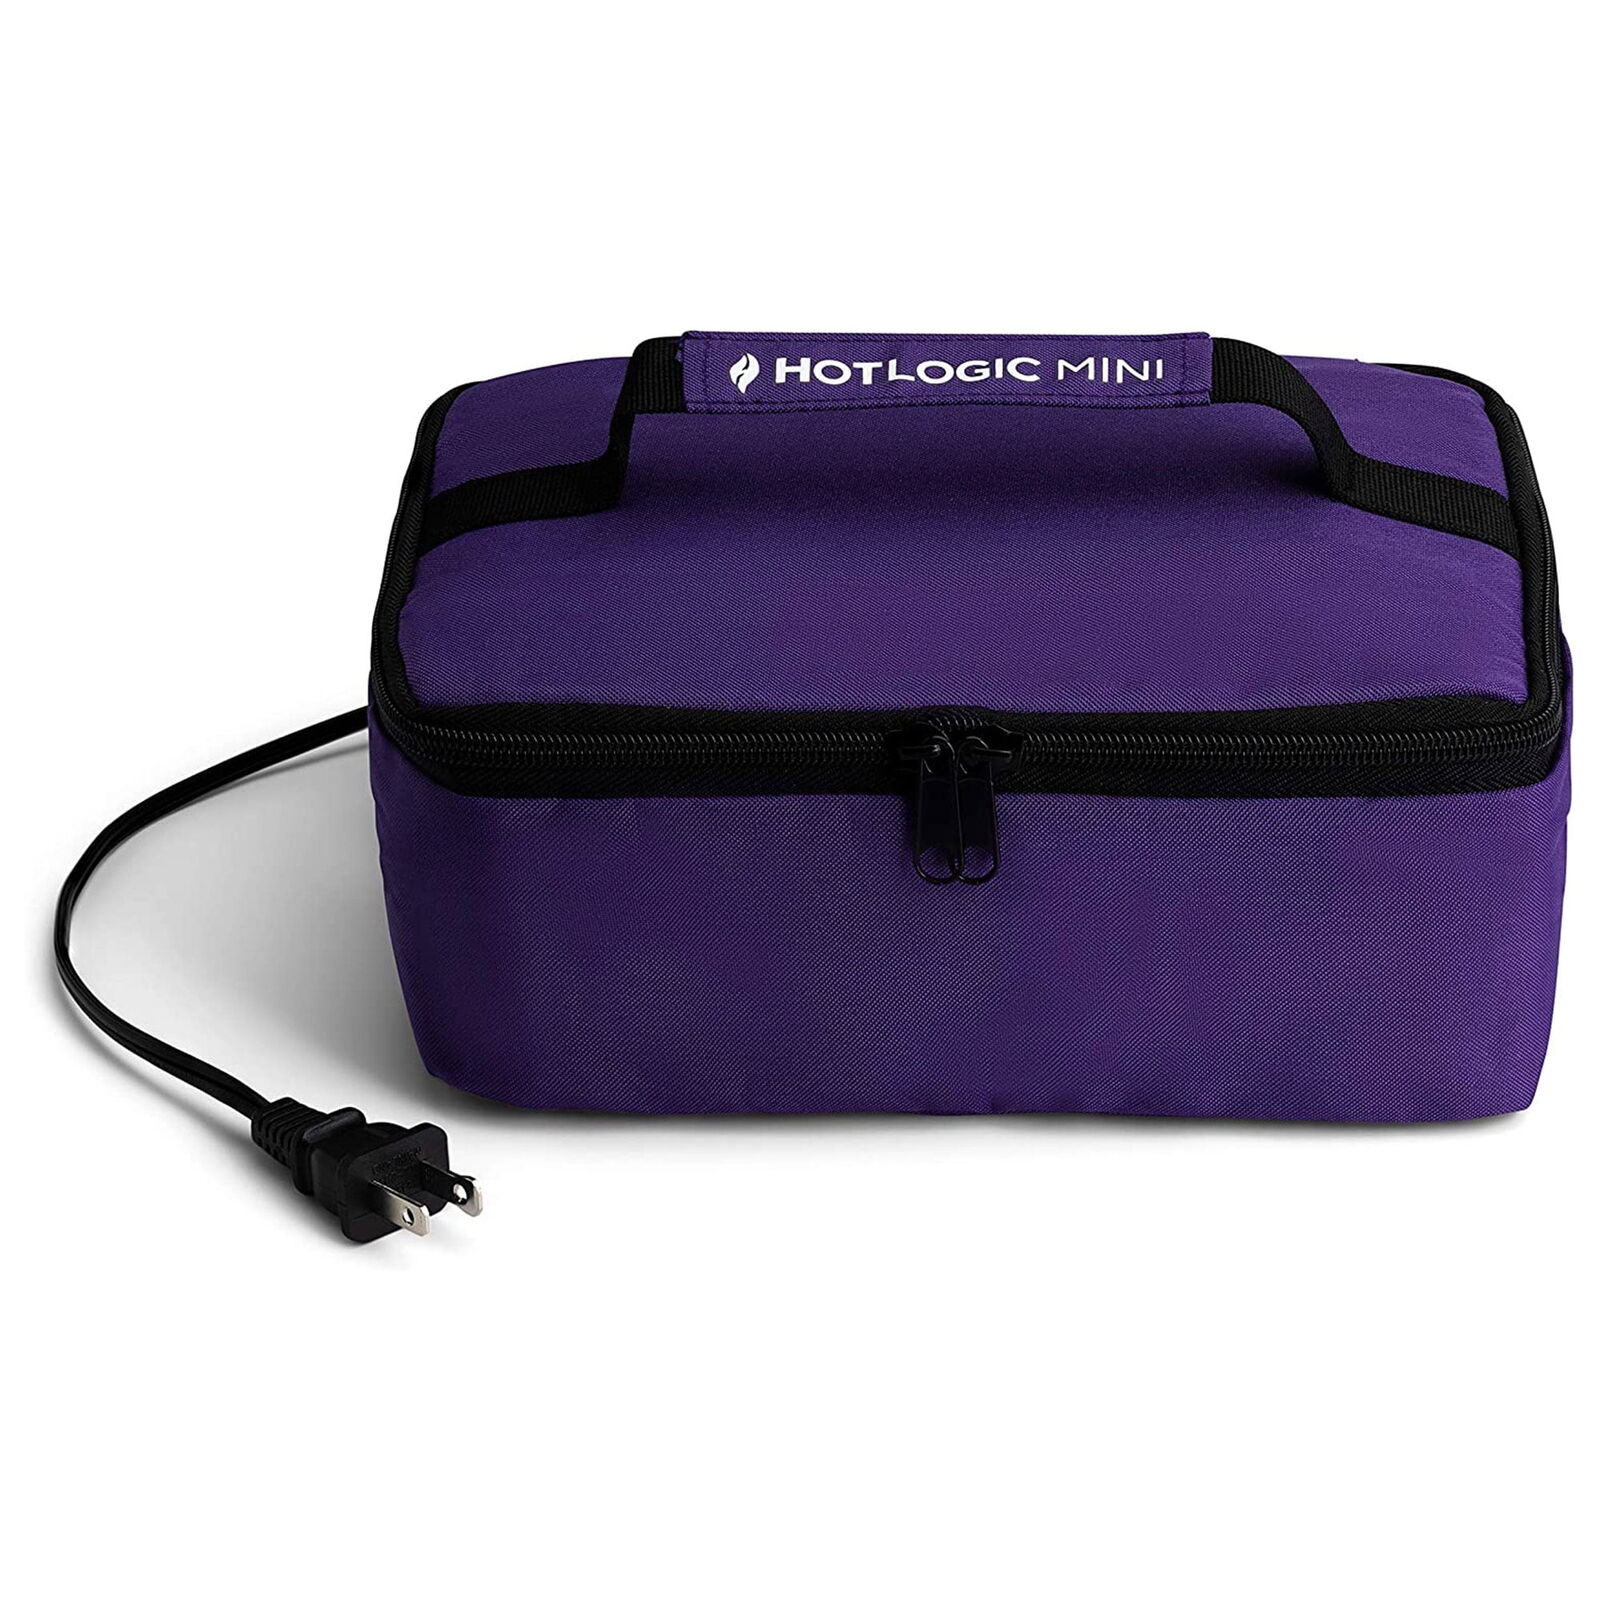 HotLogic Mini Portable Thermal Food Warmer for Office, & Travel, Purple